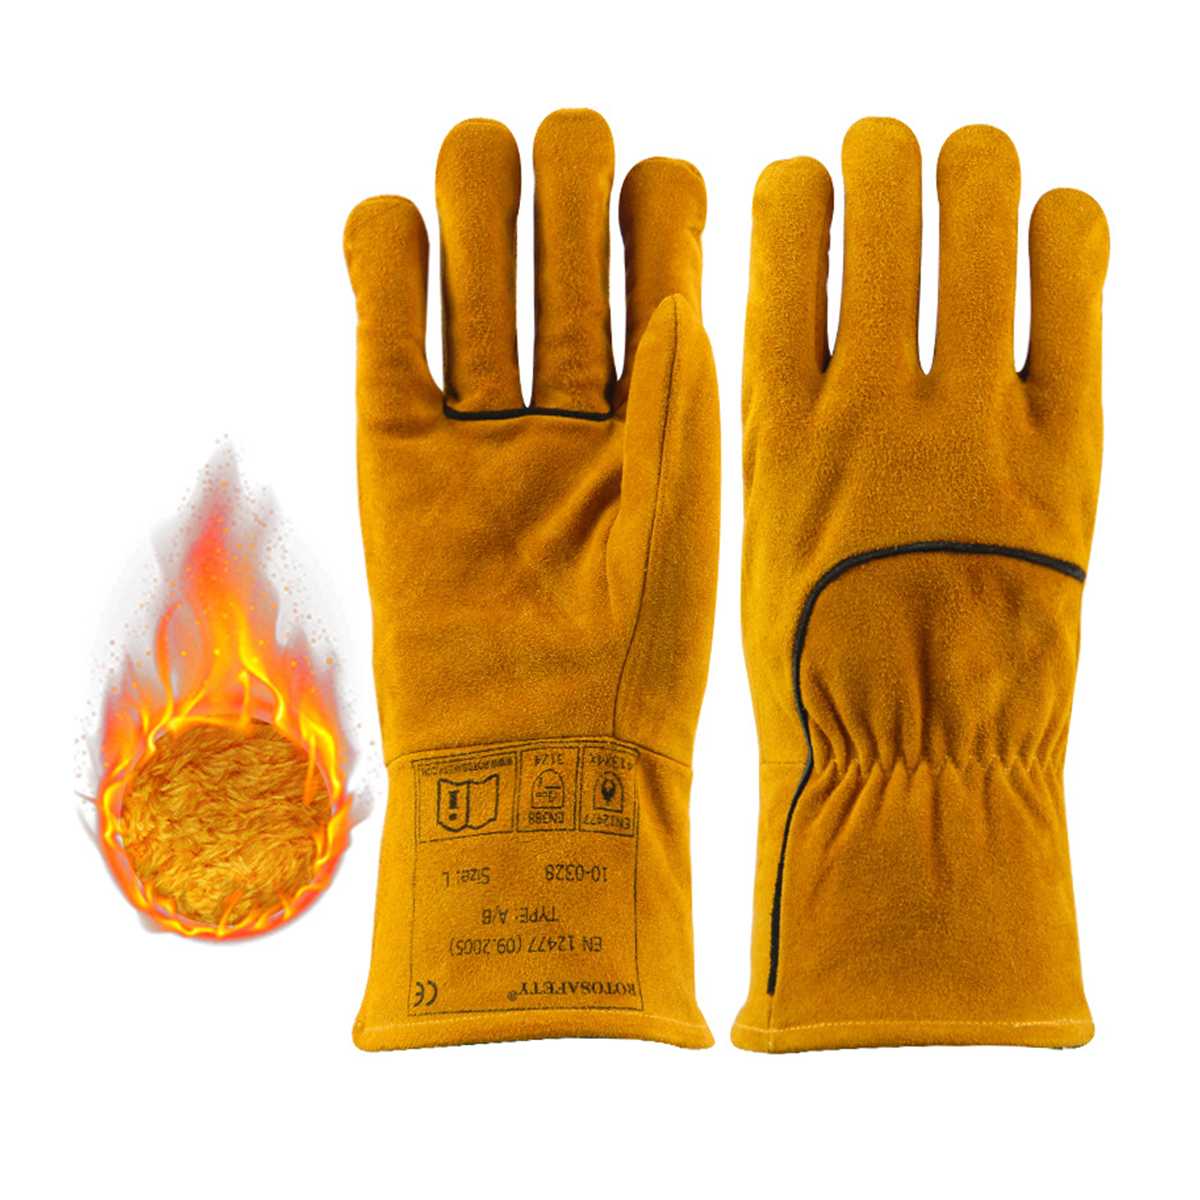 Liatlana tsa Welding Leather Forge Heat Resistant Glove bakeng sa Mig, Tig Welder, BBQ, Sebōpi